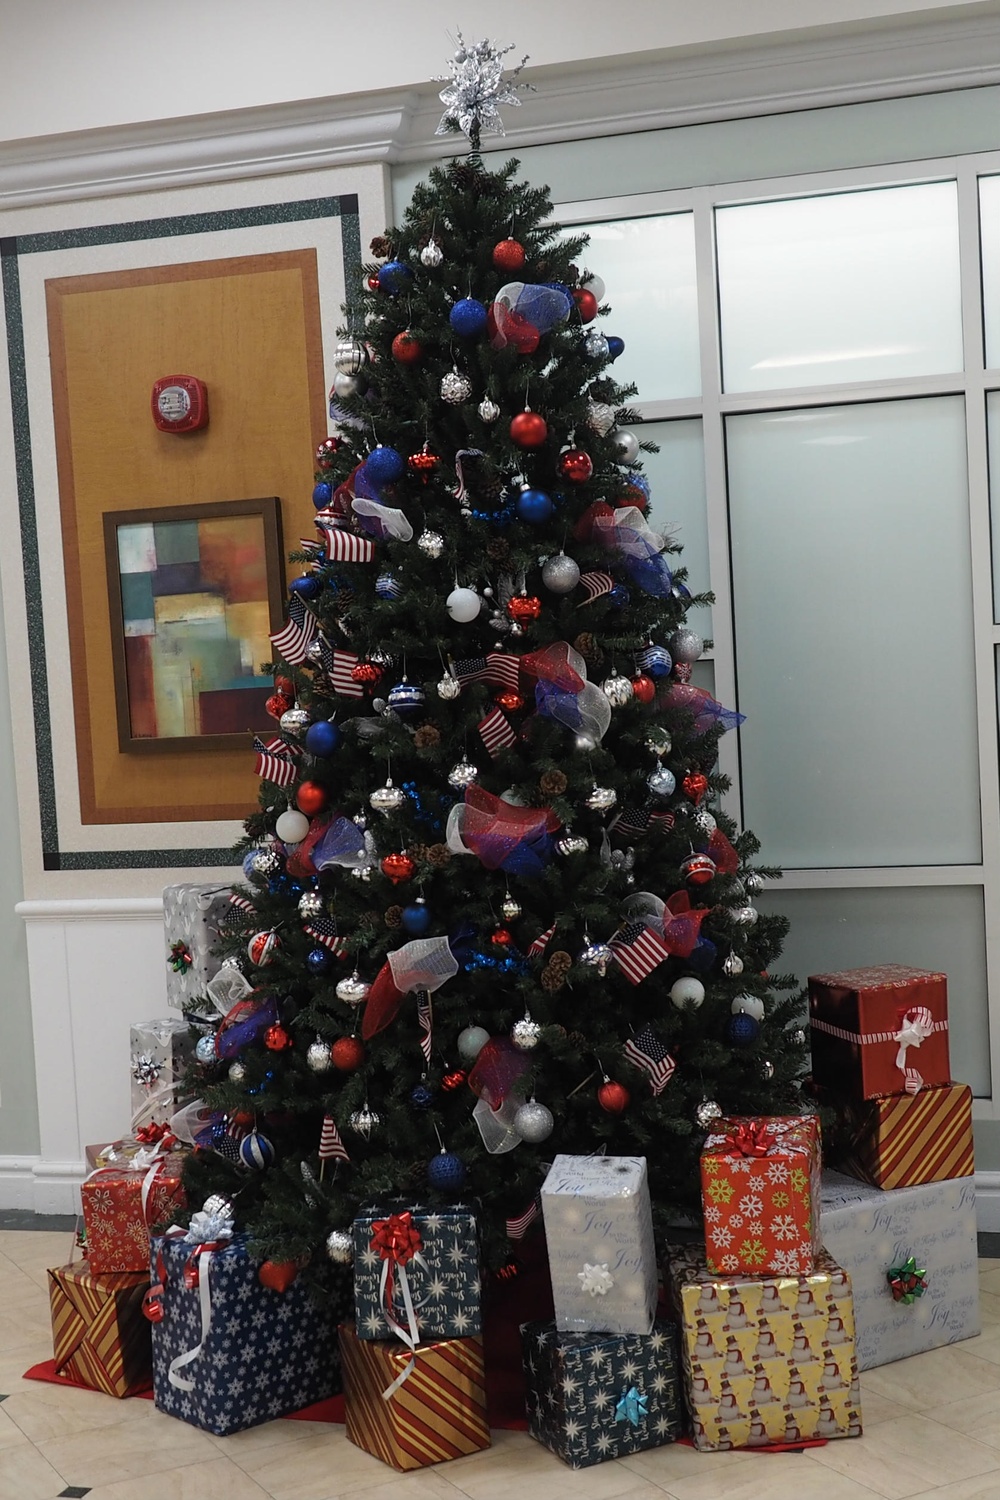 Christmas trees signal the holiday season at Columbia VA Health Care System